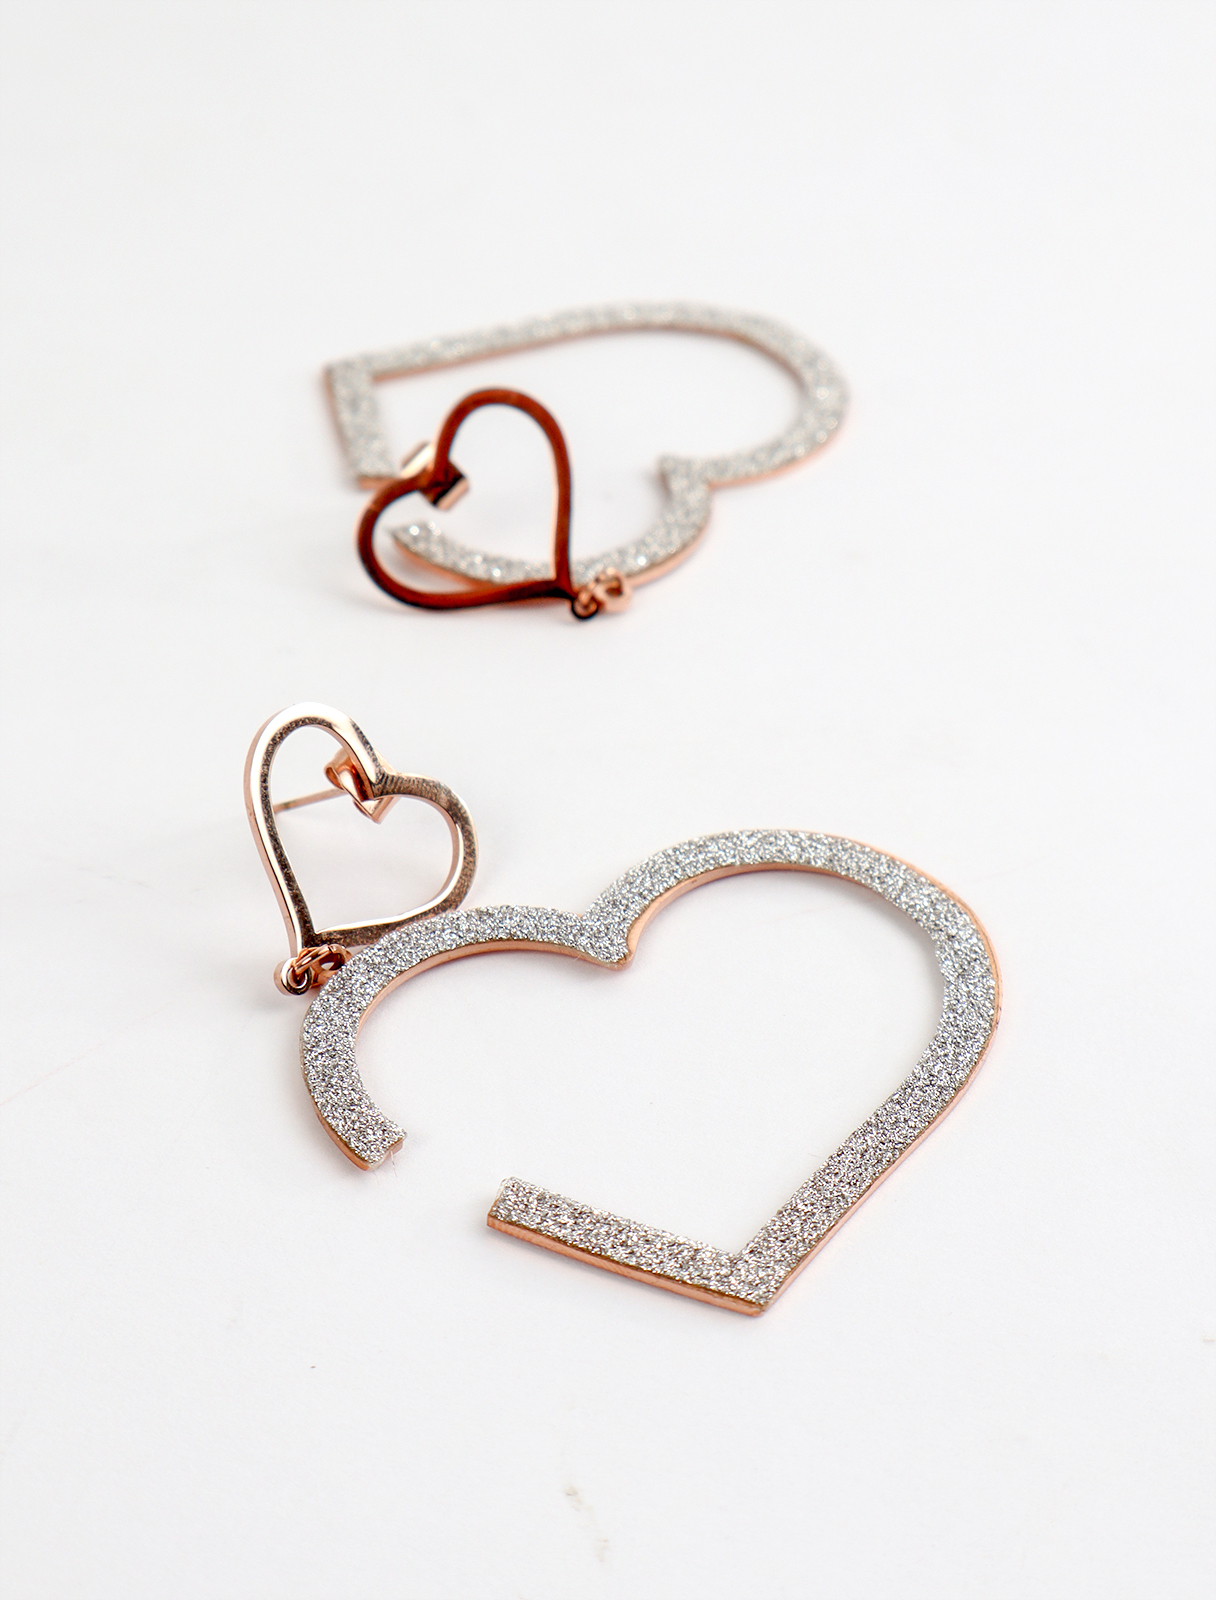 Shiny heart shaped earrings